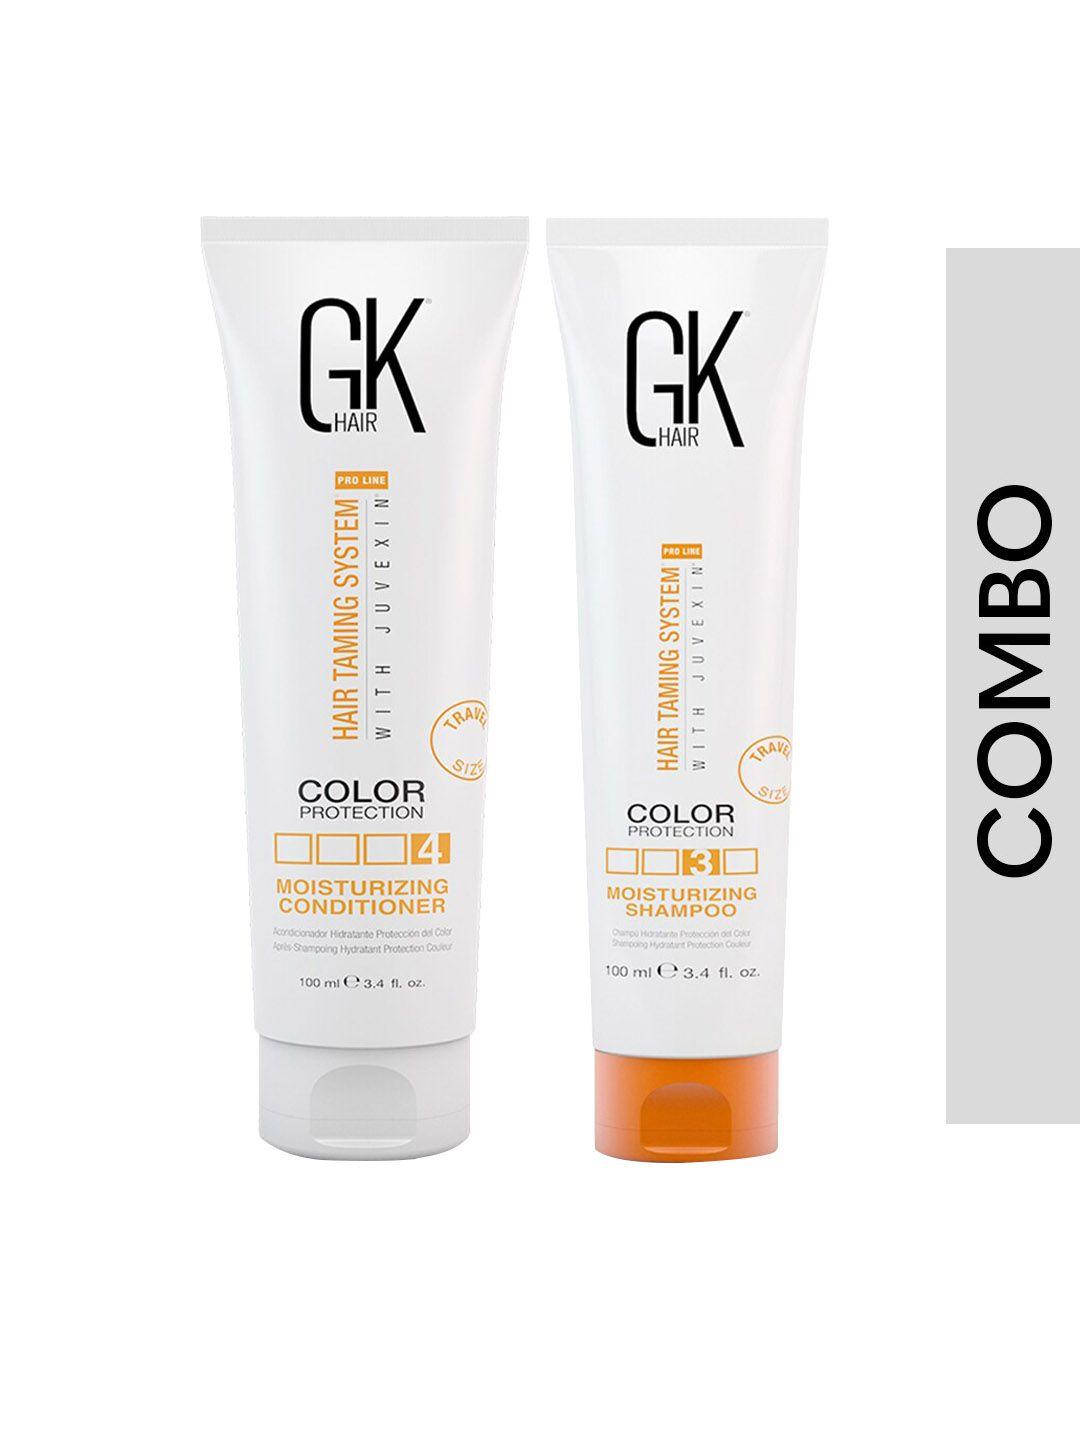 gk hair set of color protection hair moisturizing shampoo & conditioner - 100 ml each